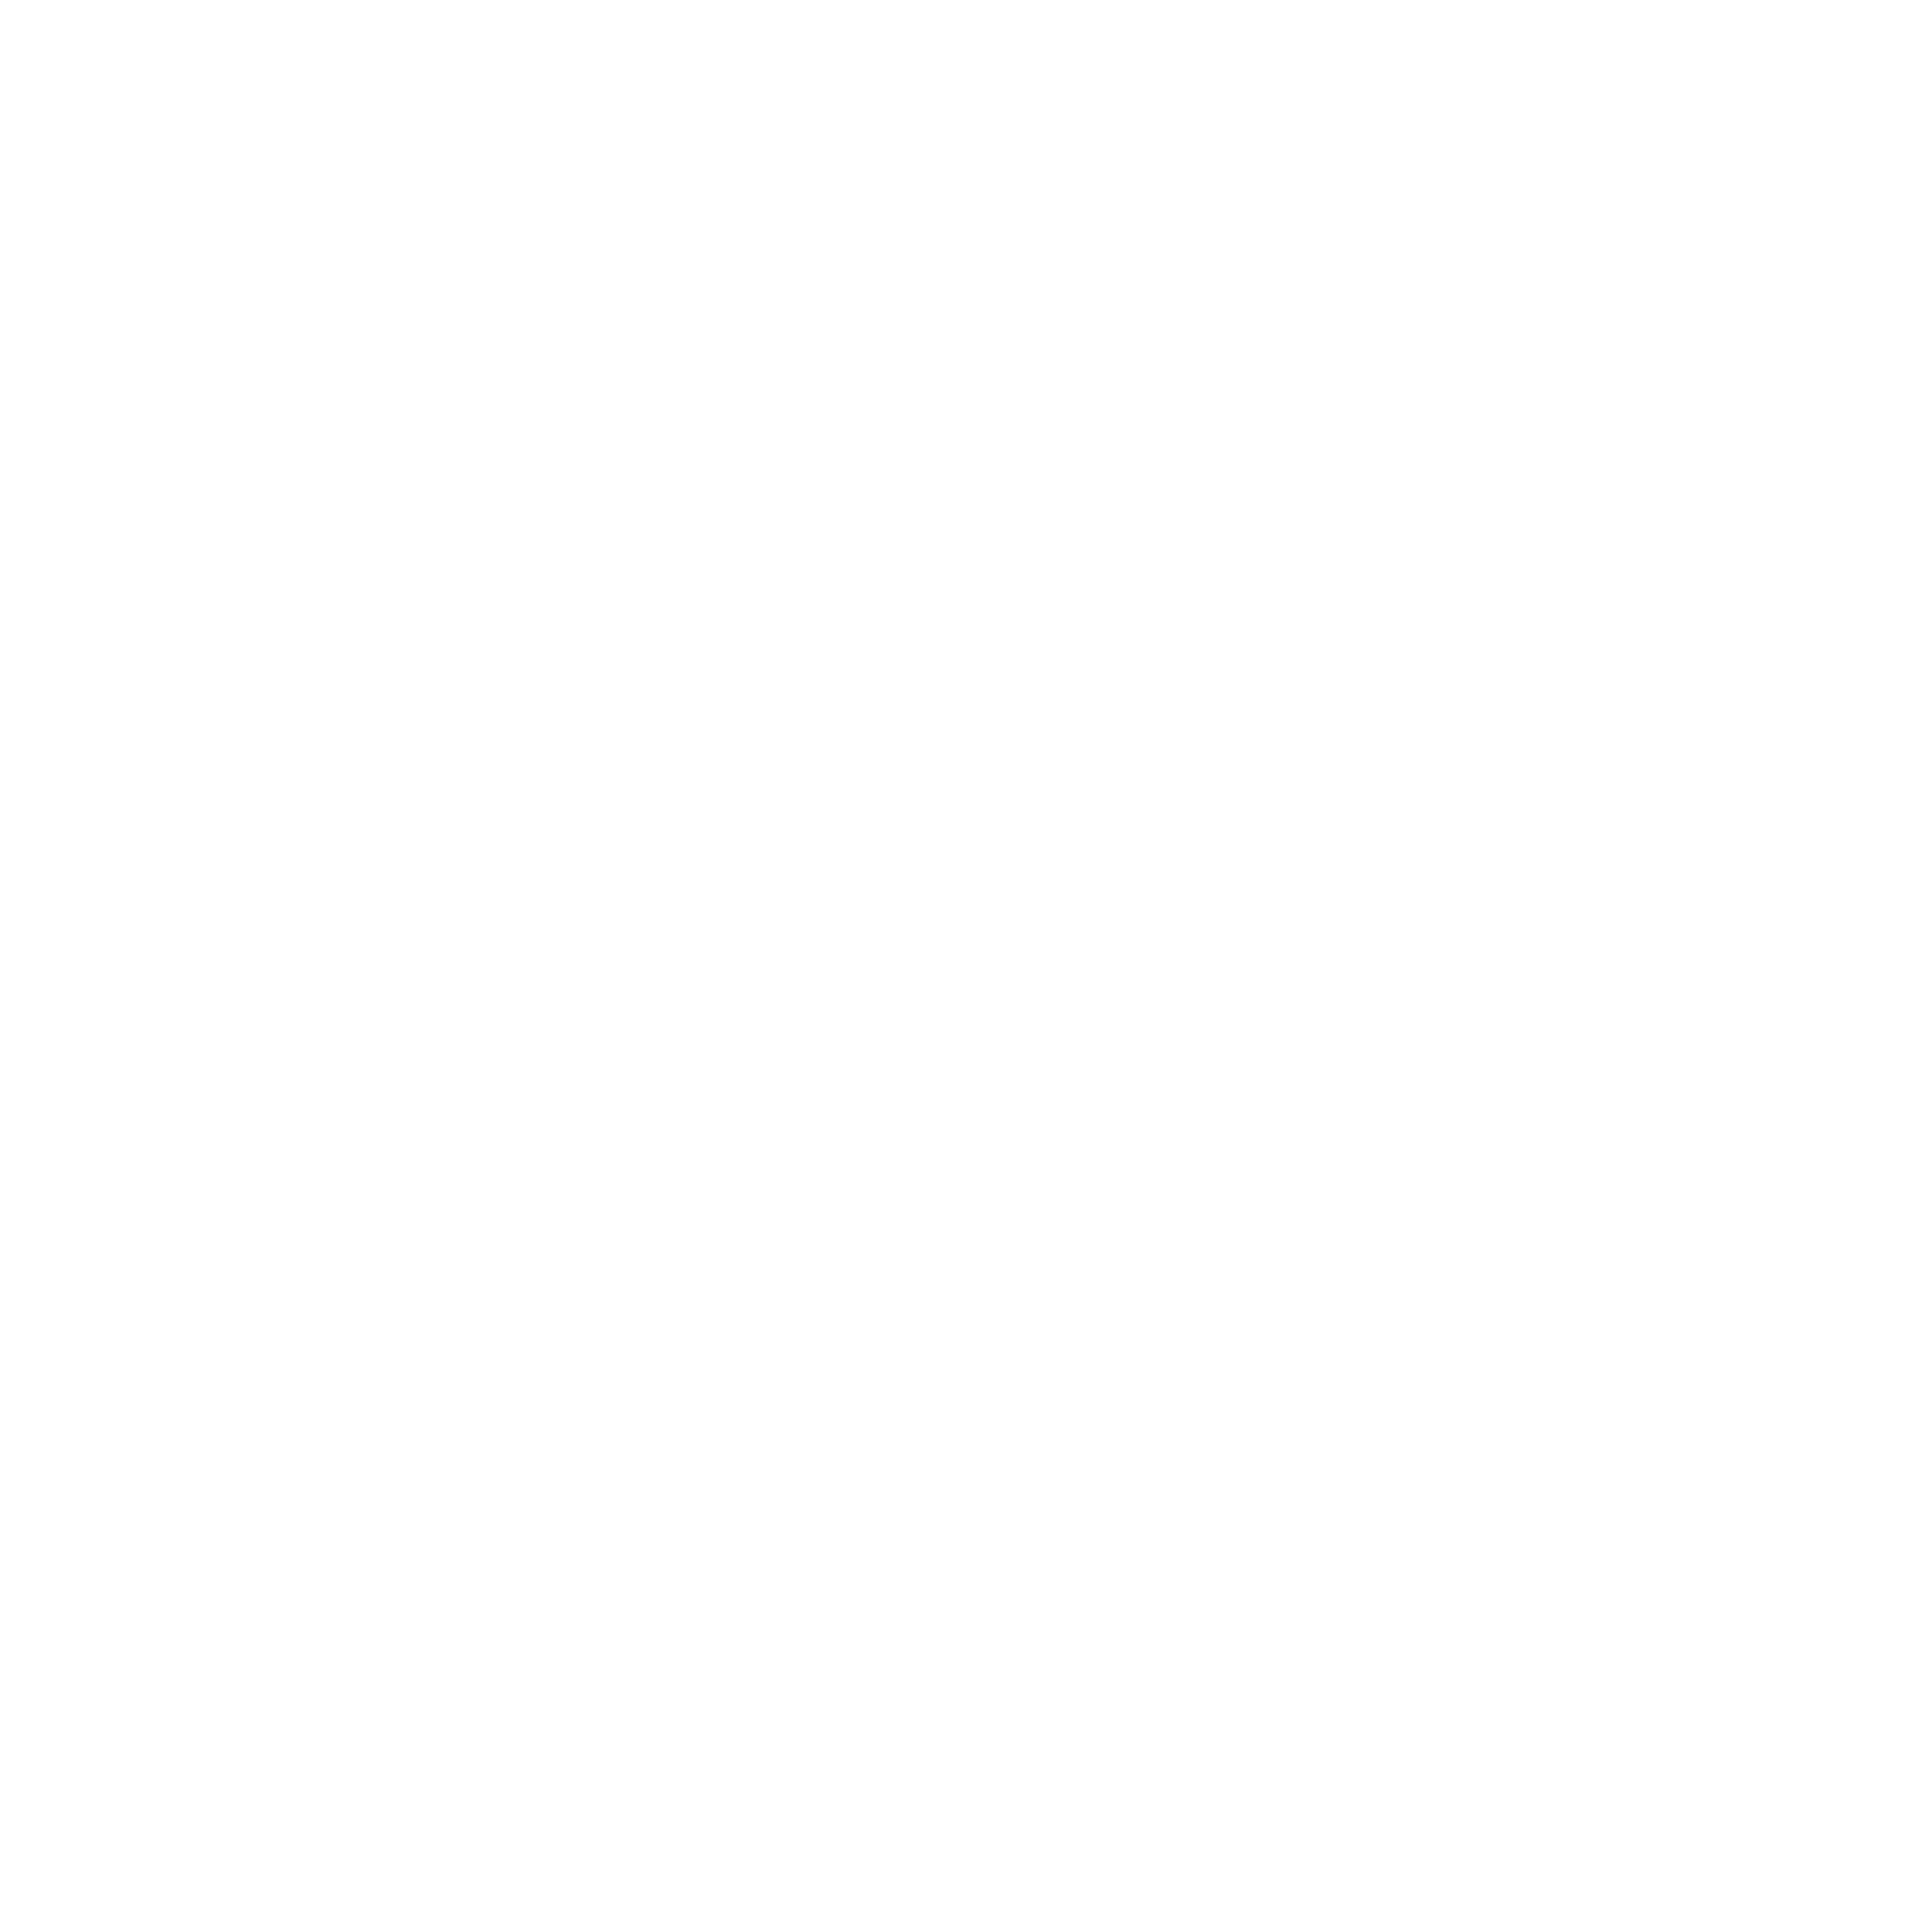 Commencement bachelors degrees